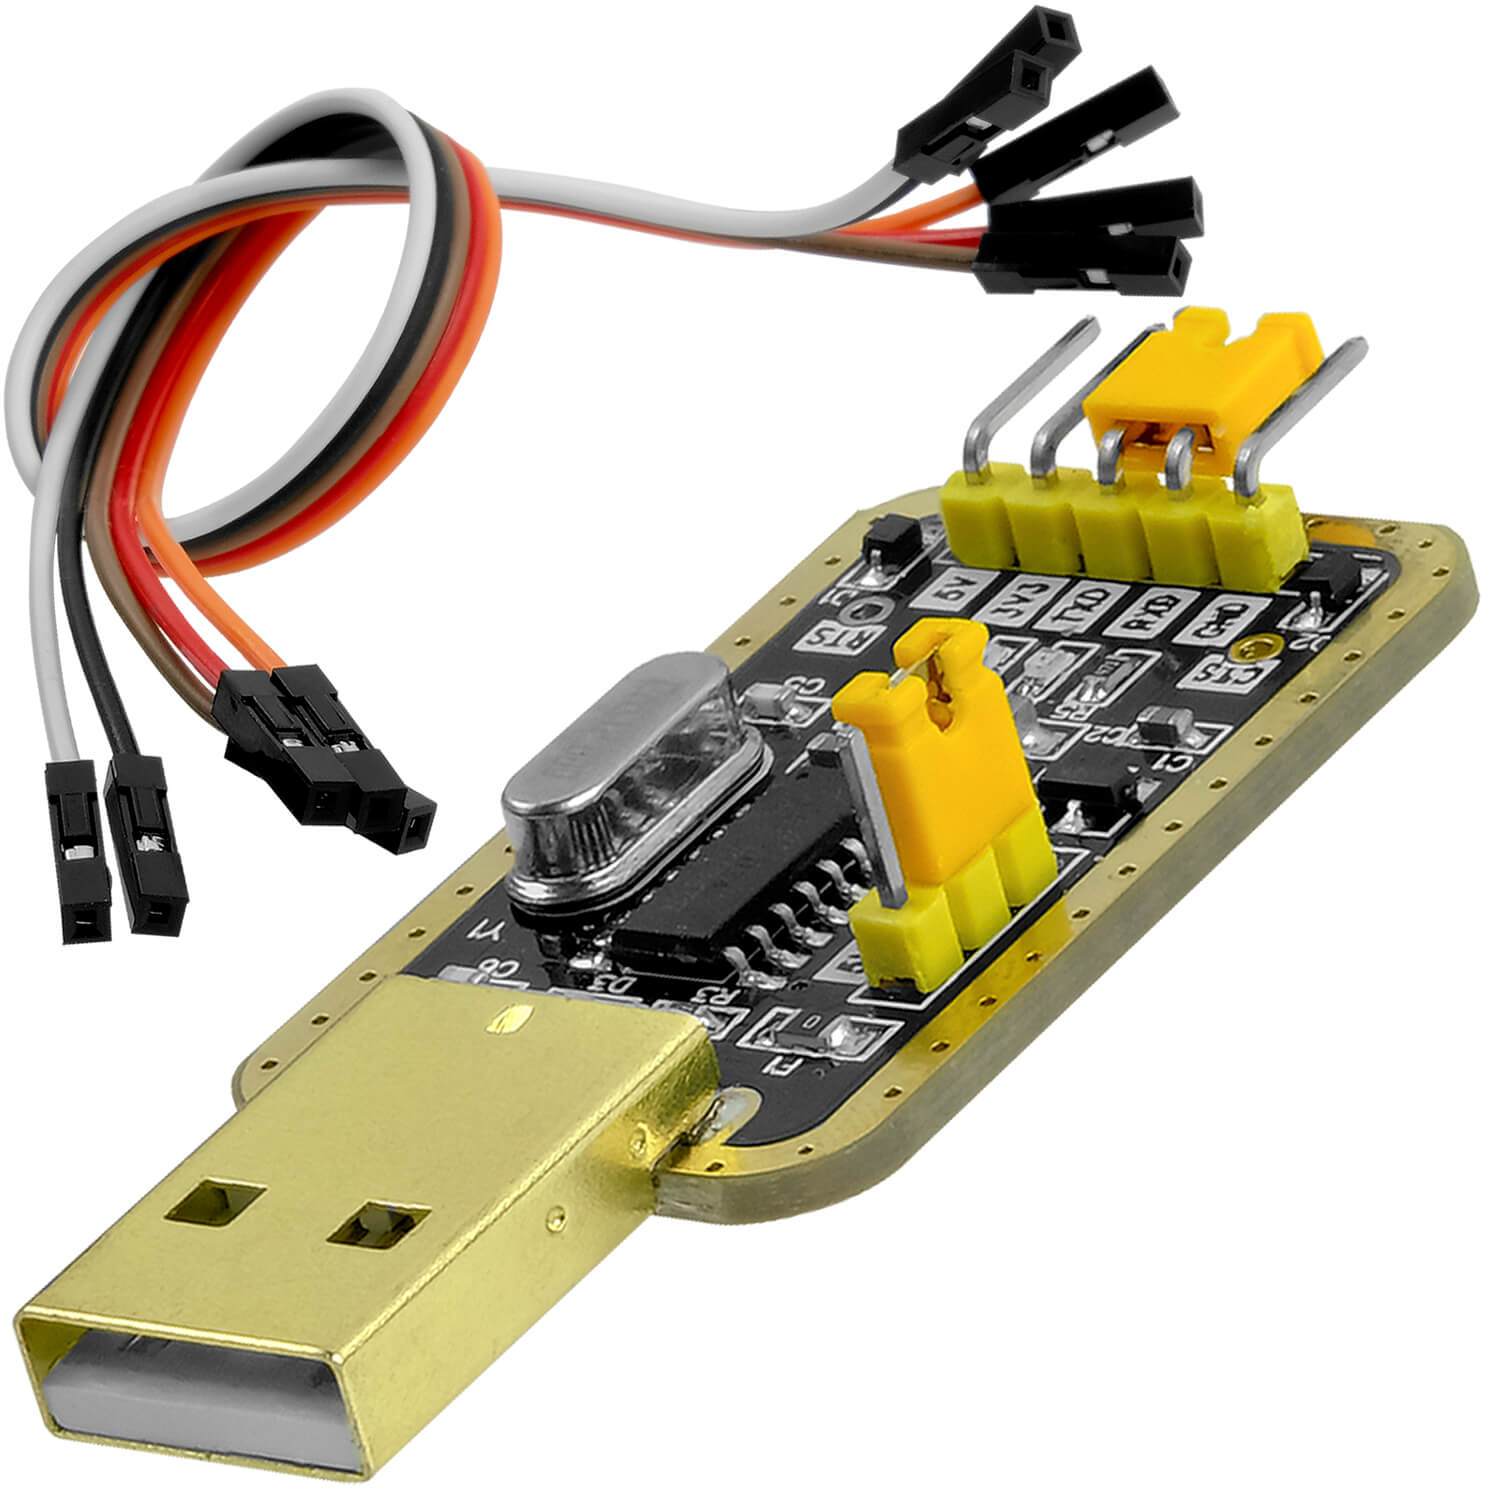 Adaptateur de port série USB CH340 TTL 3.3v-5v - Otronic